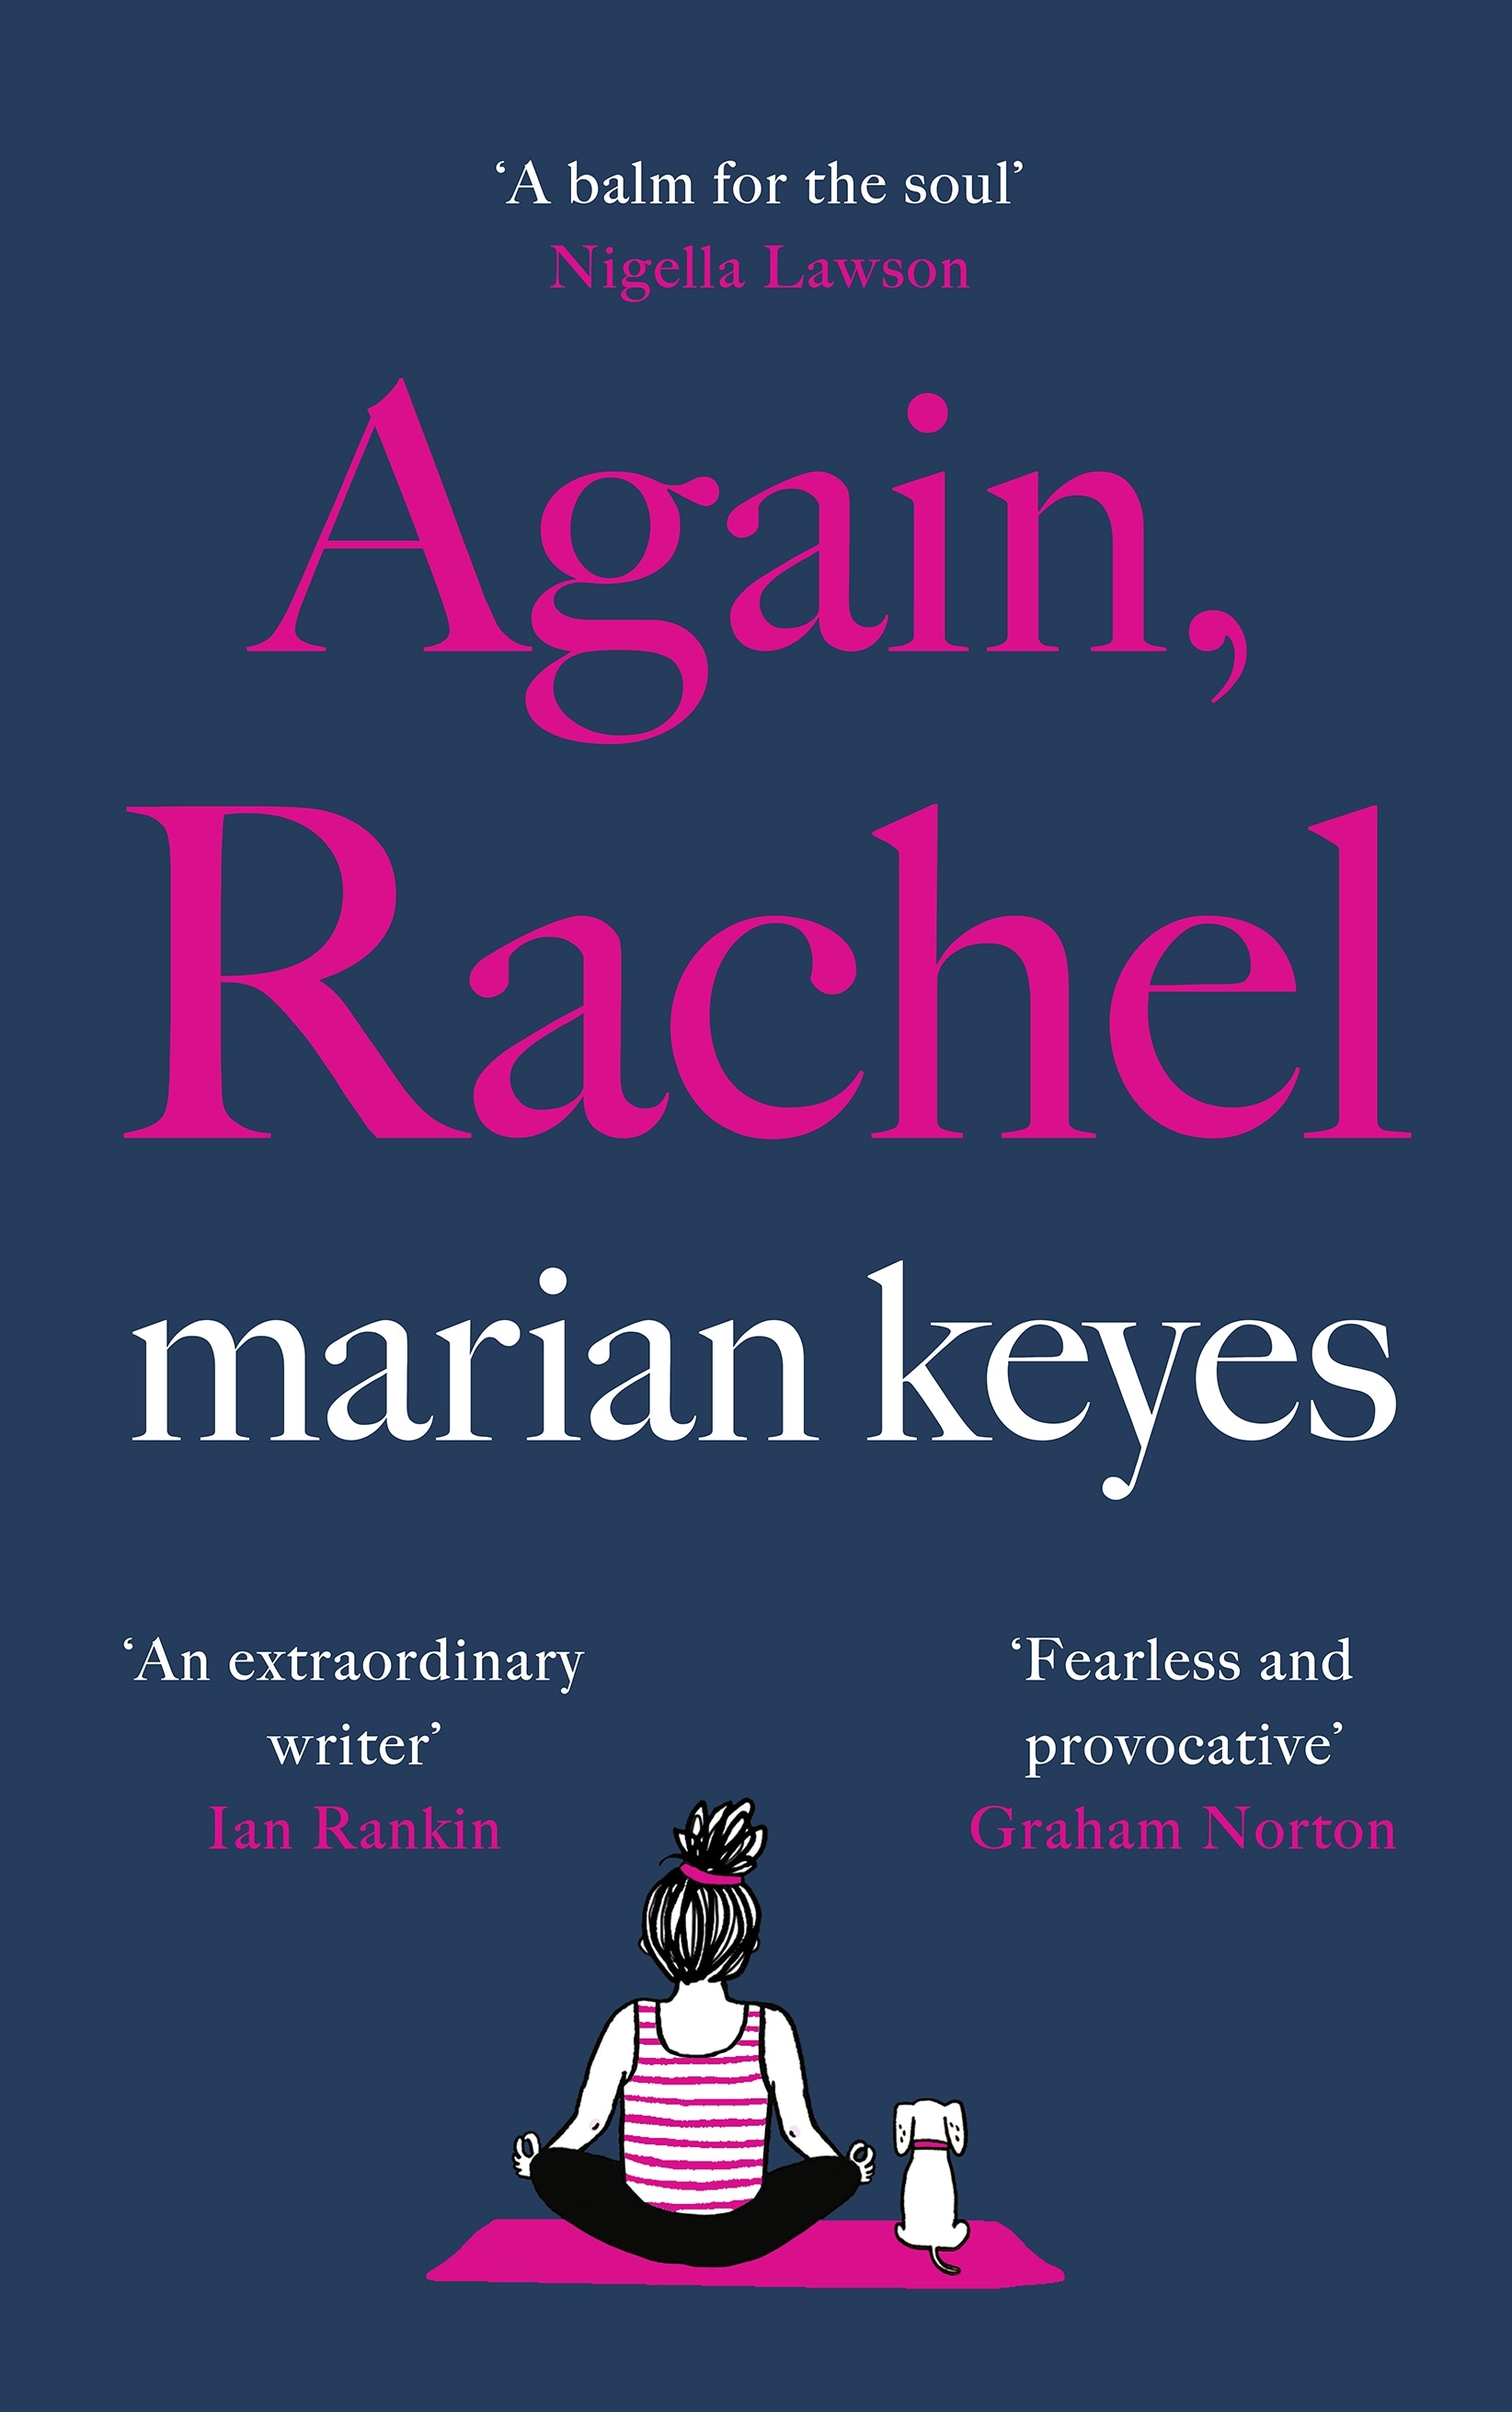 Book “Again, Rachel” by Marian Keyes — February 17, 2022